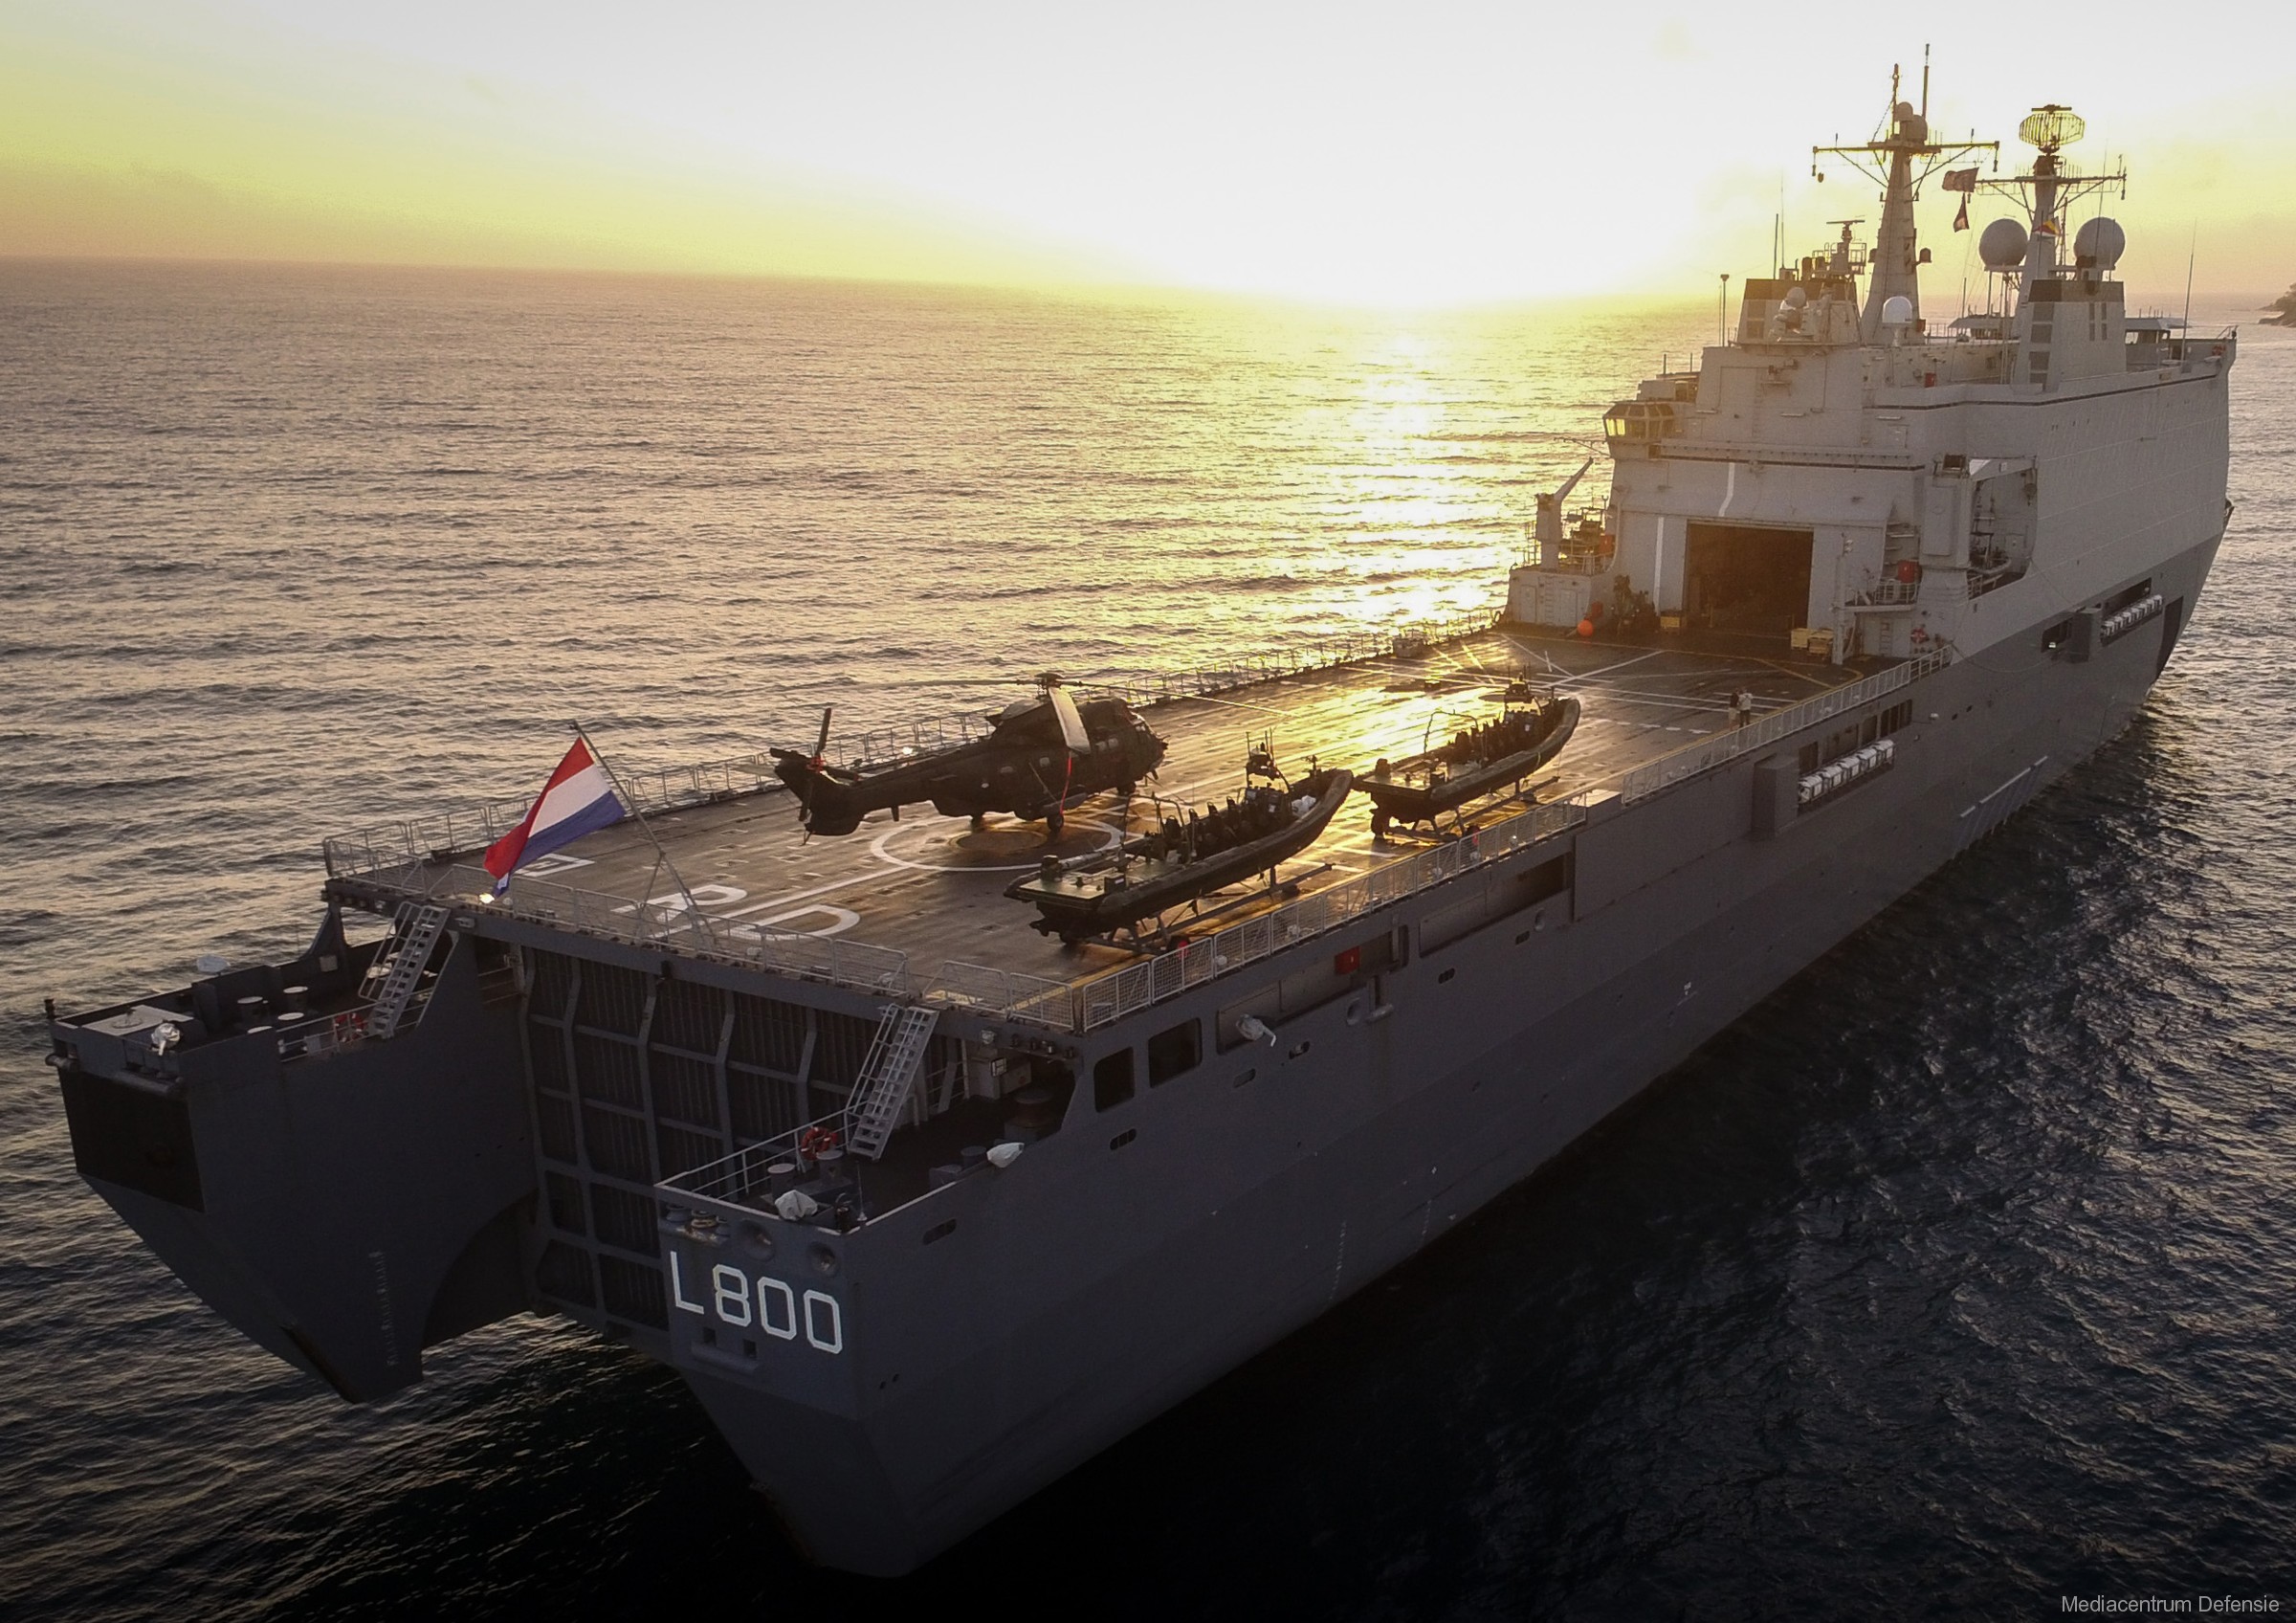 l-800 hnlms rotterdam amphibious landing ship dock lpd royal netherlands navy 04 cougar helicopter